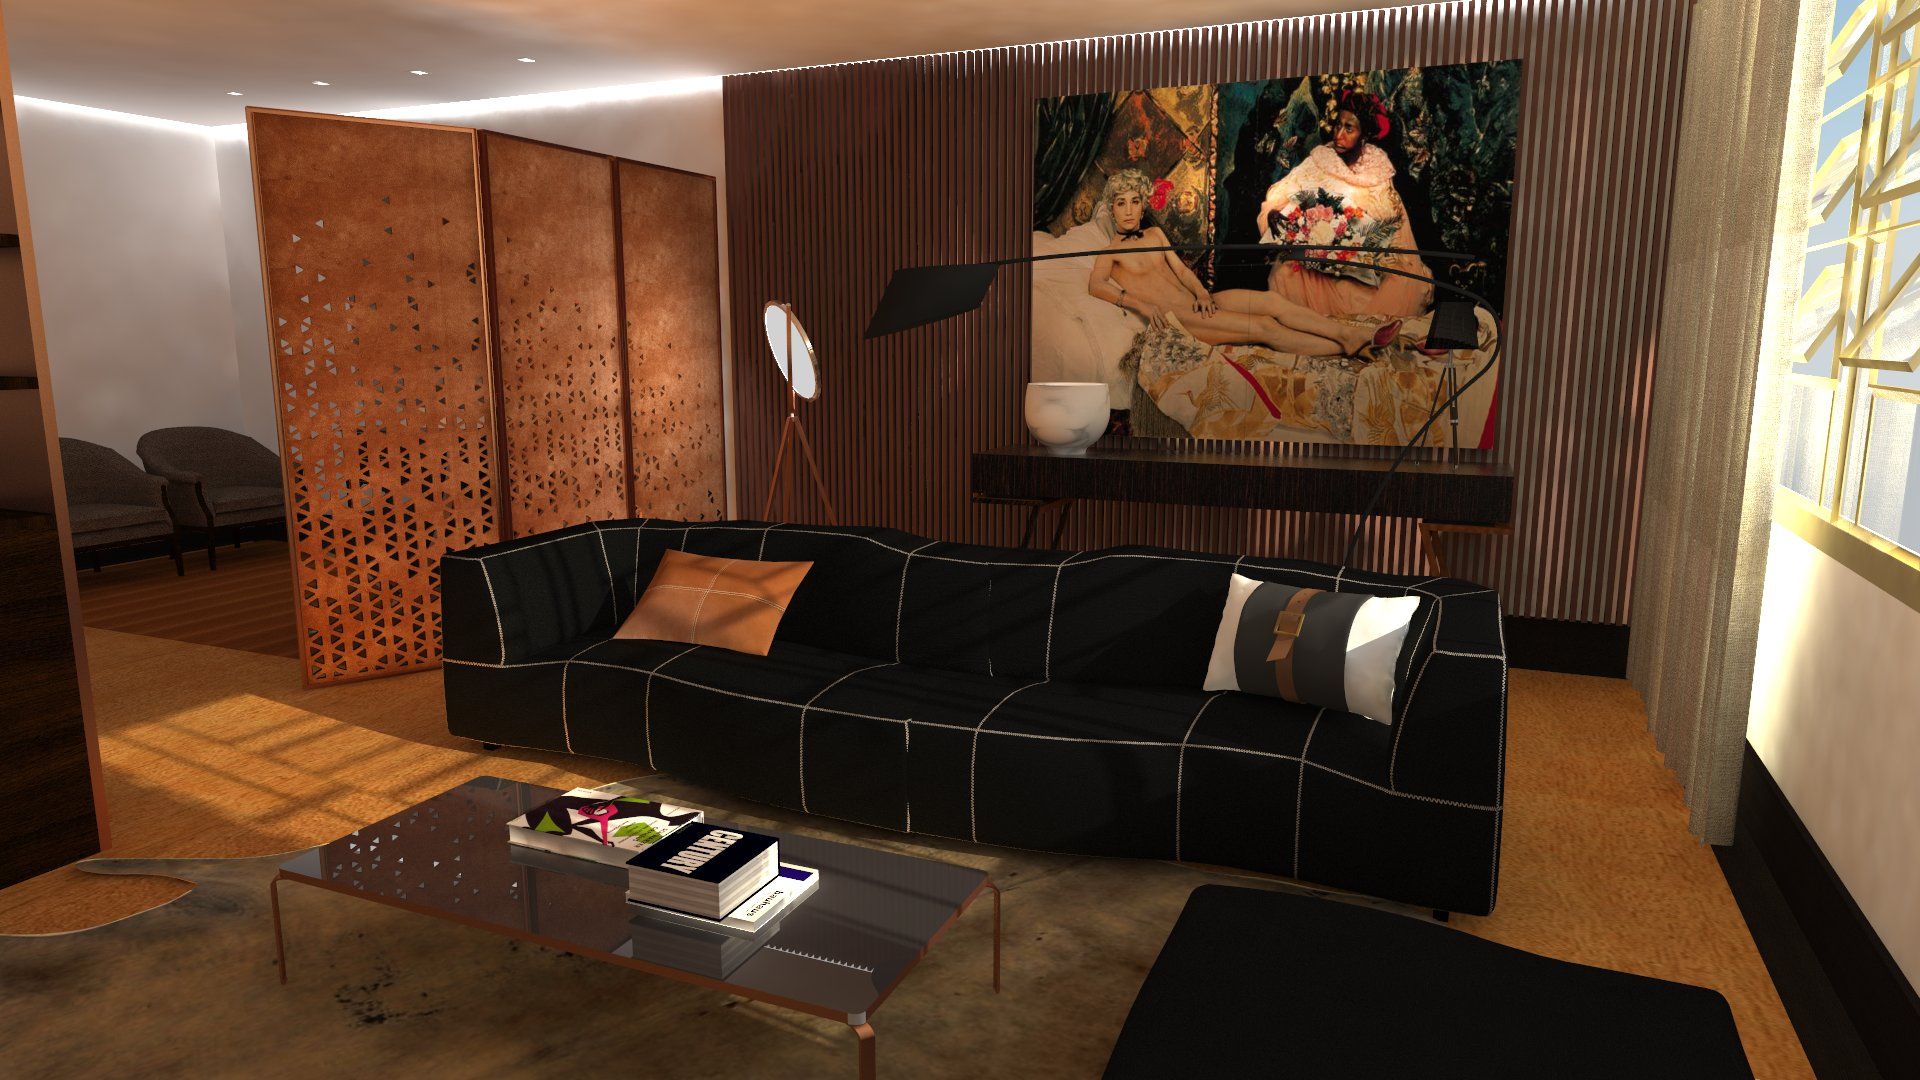 Residence| interior design living room by Paula Gouveia Living room